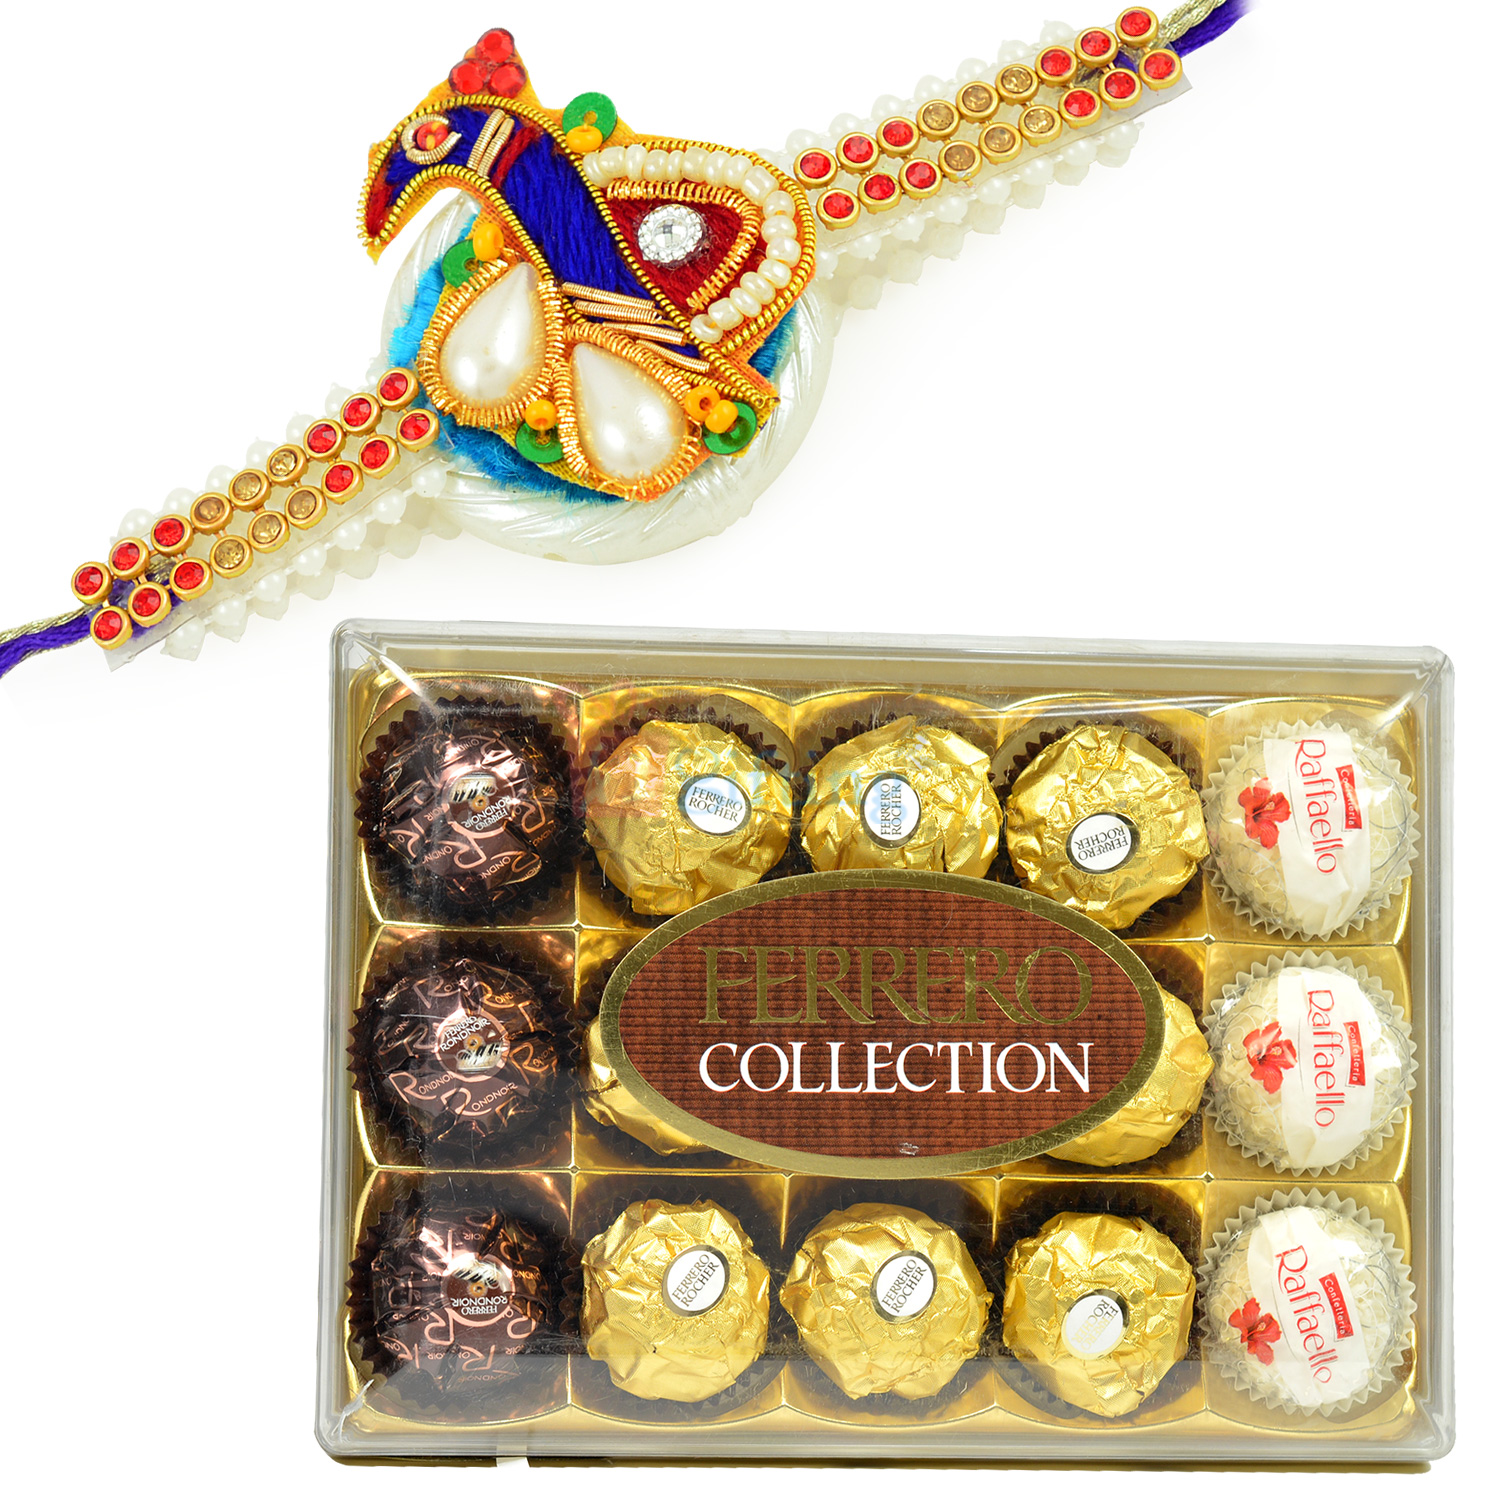 Zardosi Work Peacock Rakhi with Ferrero Collection Chcolate Box